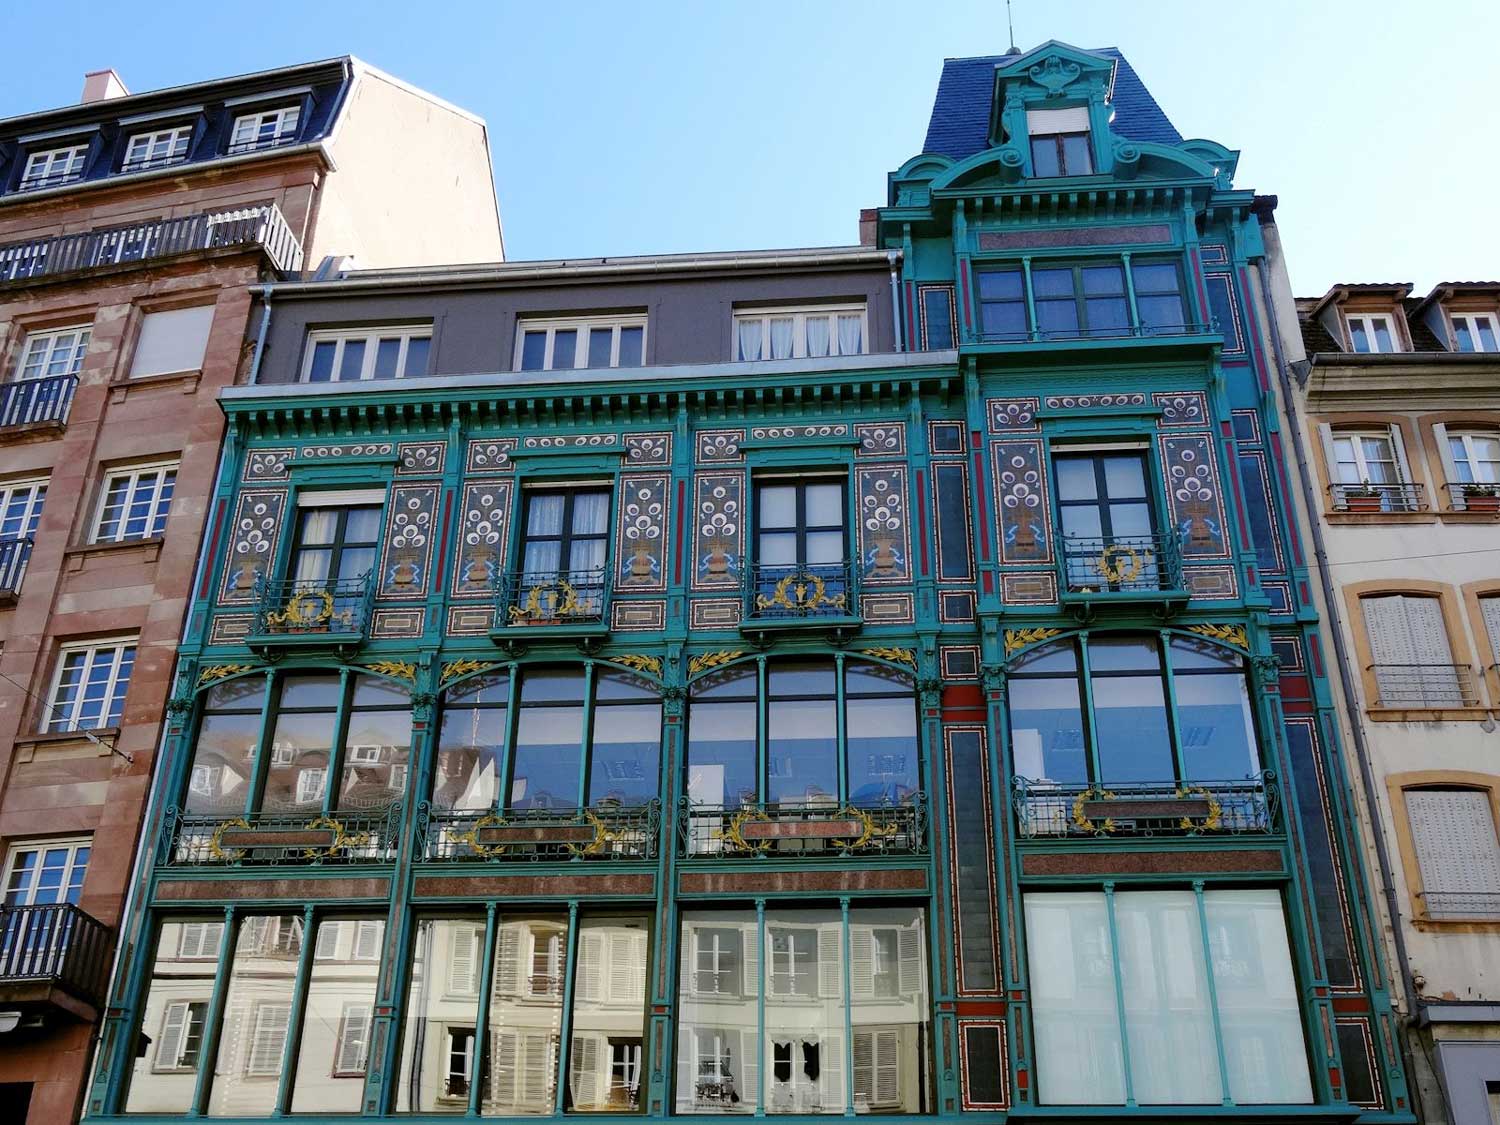 The Manrique store, Art Nouveau or Jugendstil style